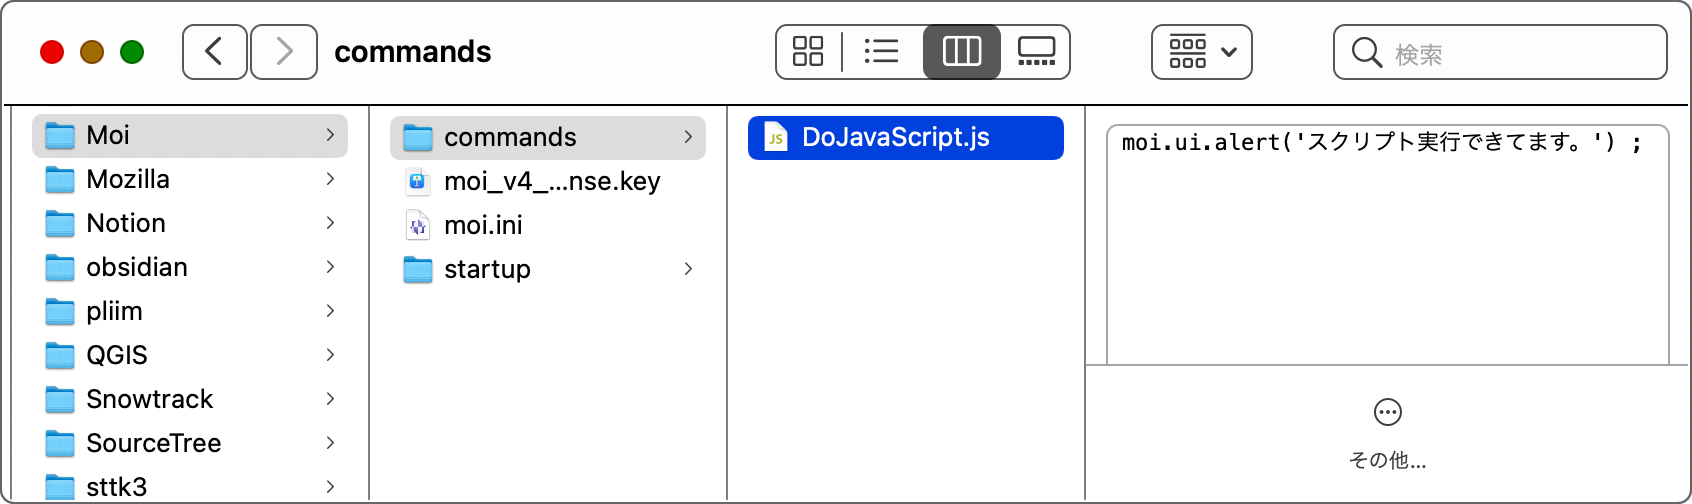 DoJavaScript.jsを所定のフォルダに配置した状態の画像